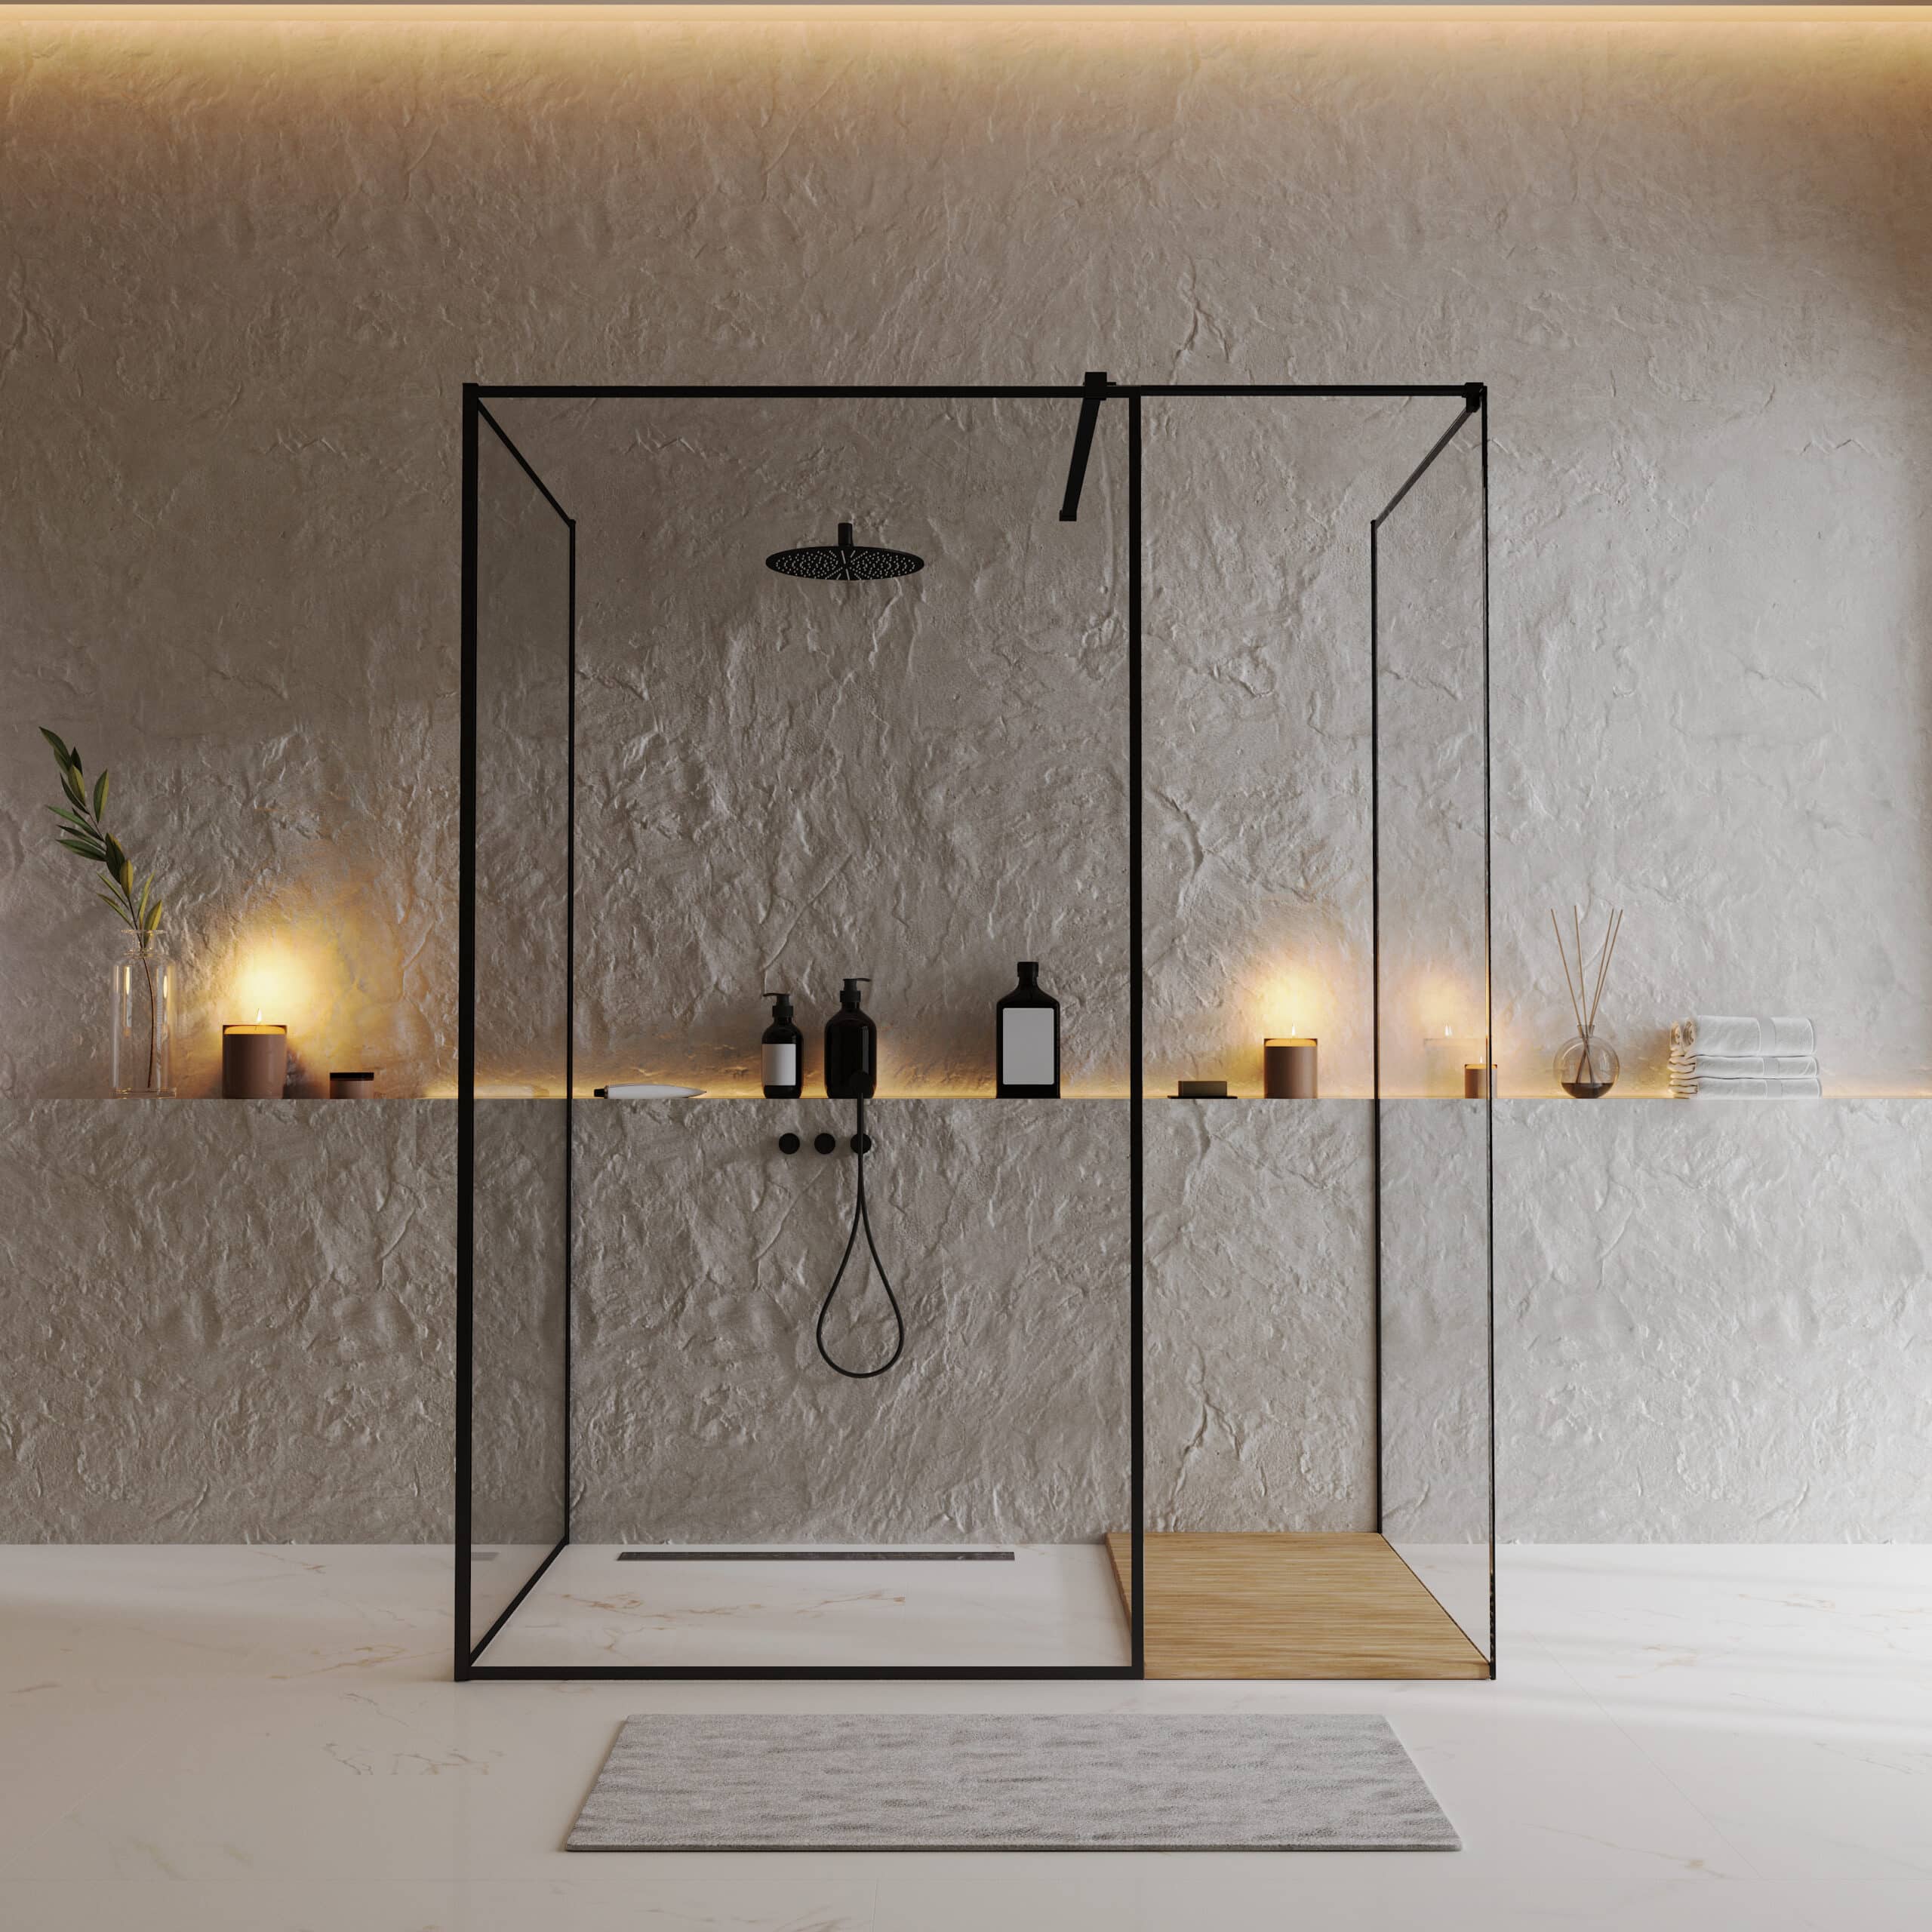 luxury bathroom with shower cabin, 3d rendering